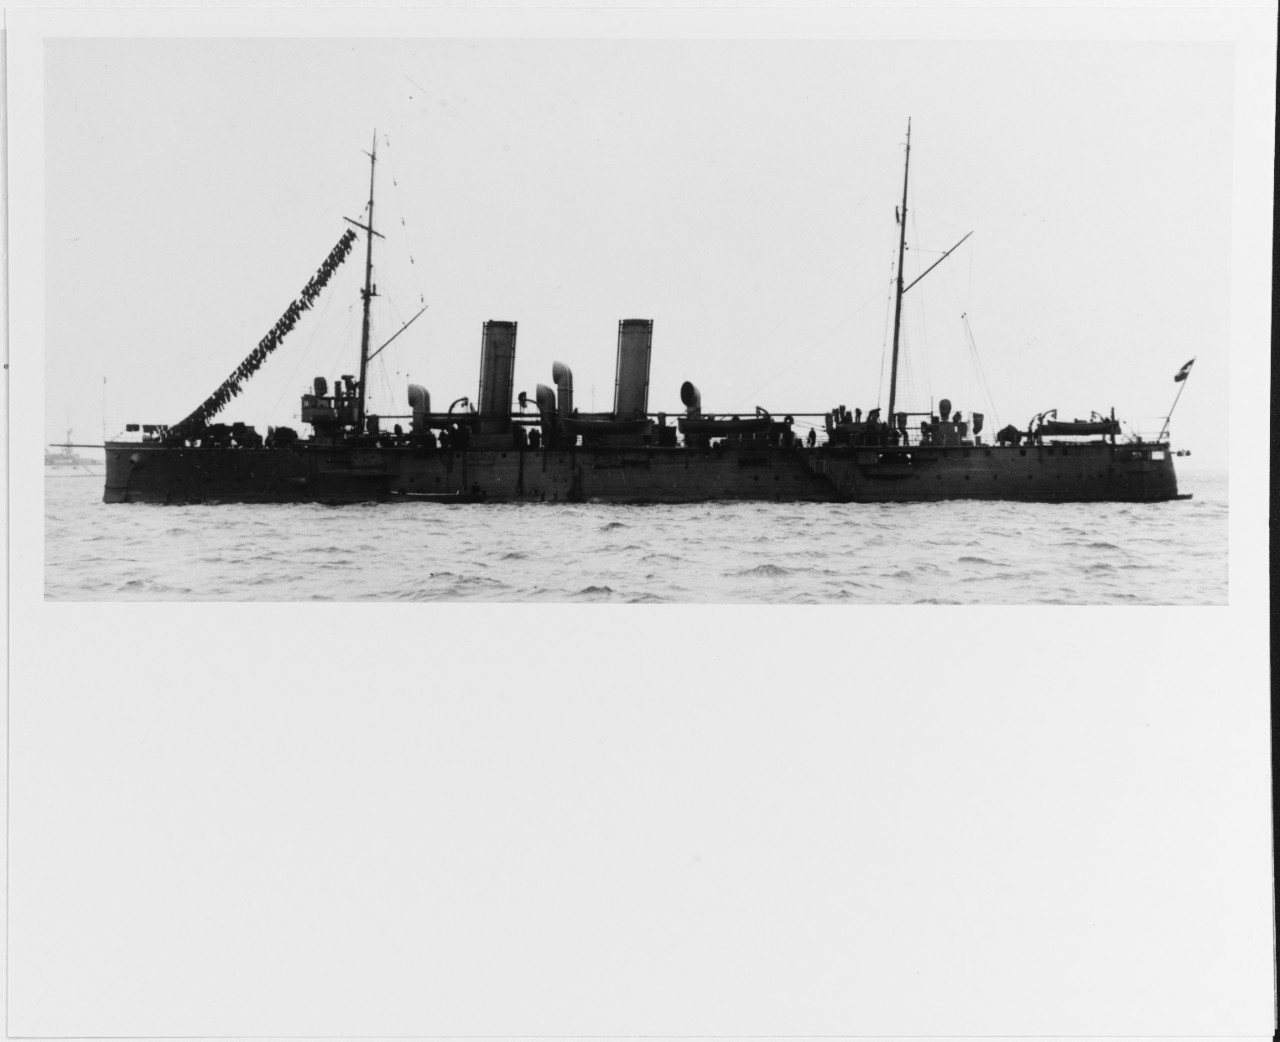 ASPERN (Austro-Hungarian cruiser, 1899)